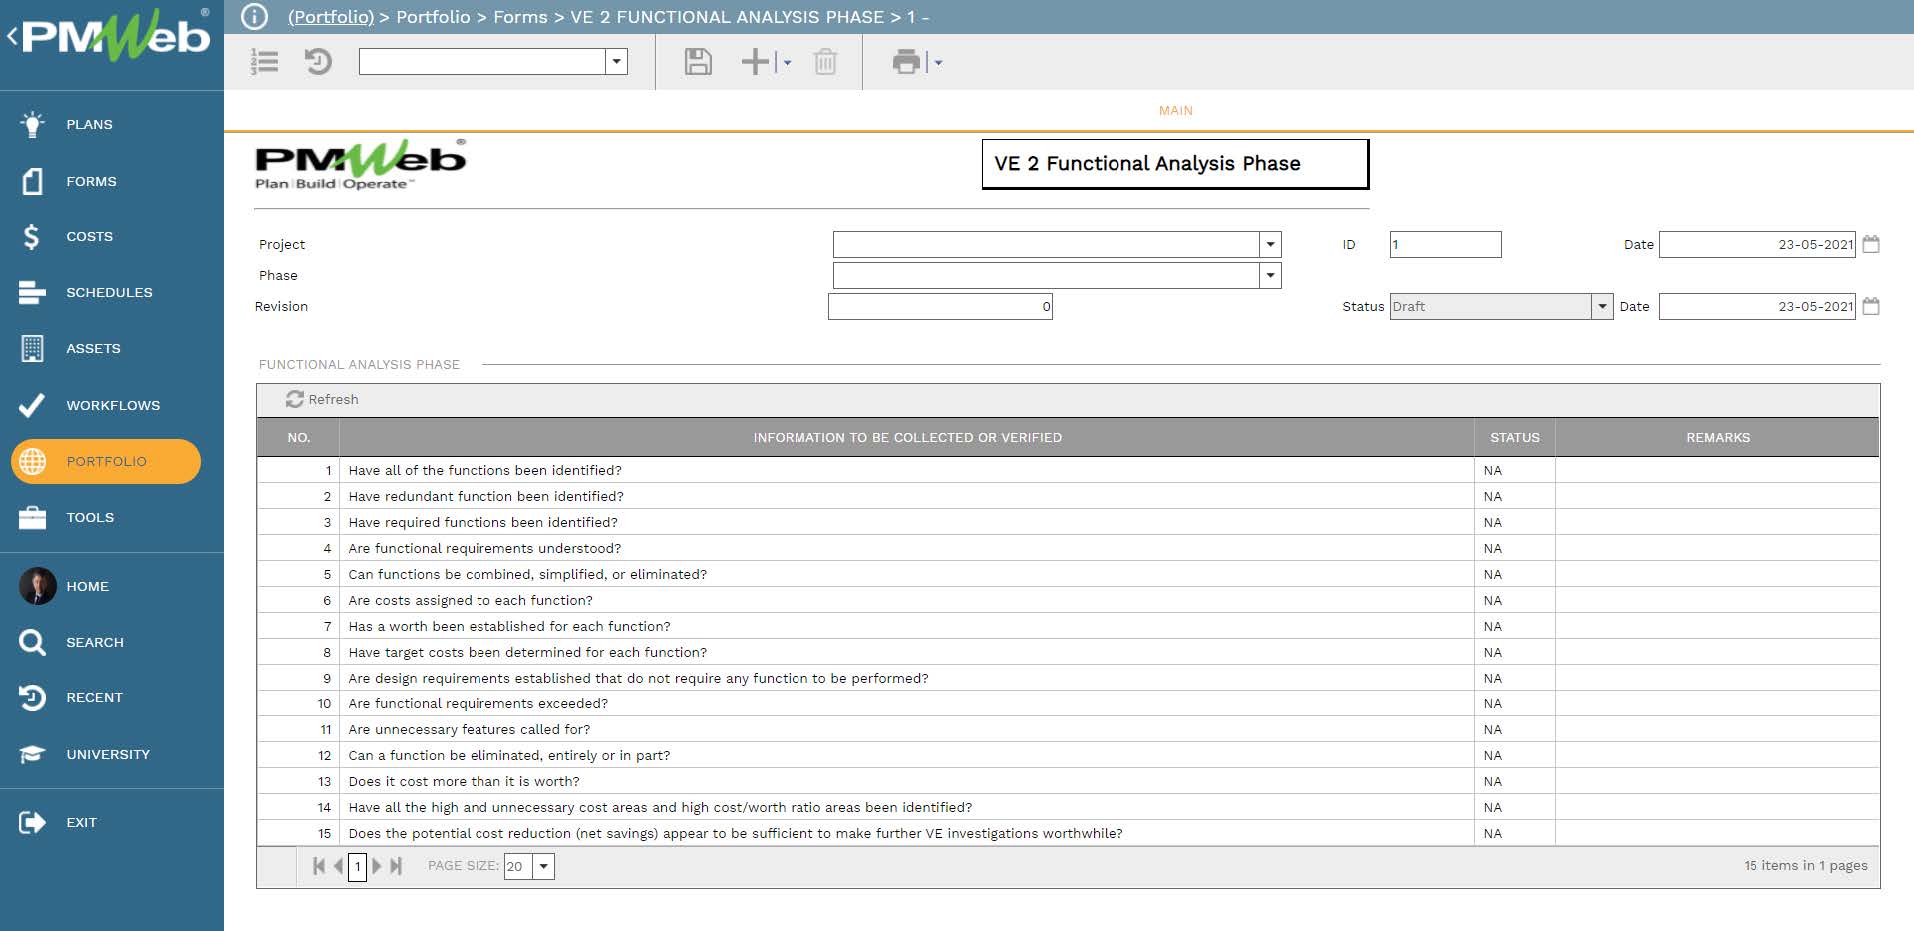 PMWeb 7 Portfolio Forms VE Function Analysis Phase 